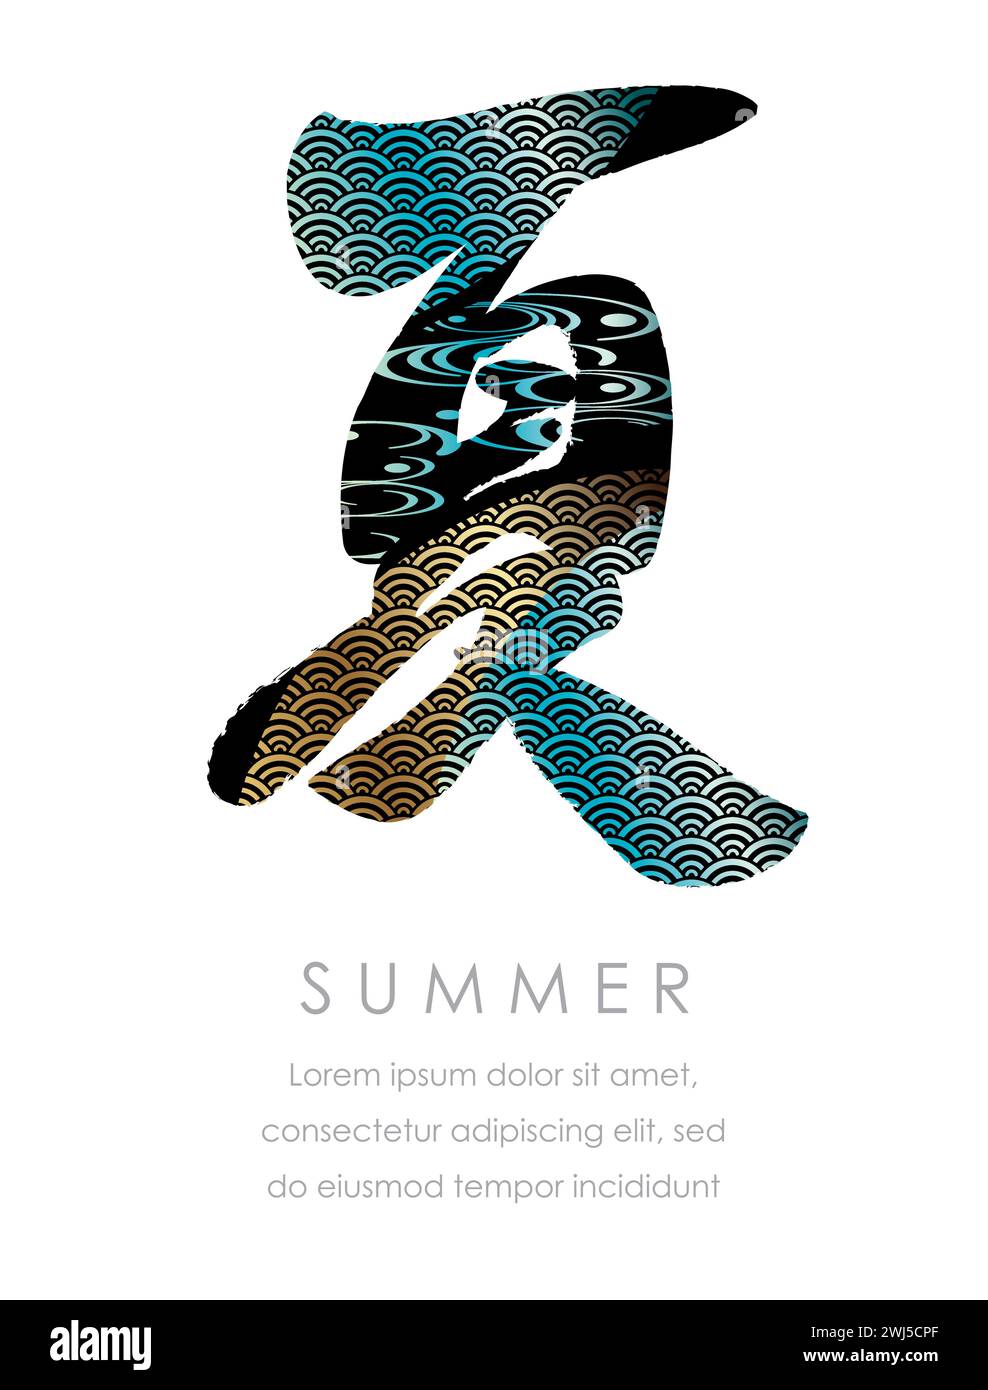 Japanischer Kanji-Charakter Kalligraphie, NATSU, dekoriert mit Vintage-Mustern, Vektor-Illustration. Textübersetzung – Sommer. Stock Vektor